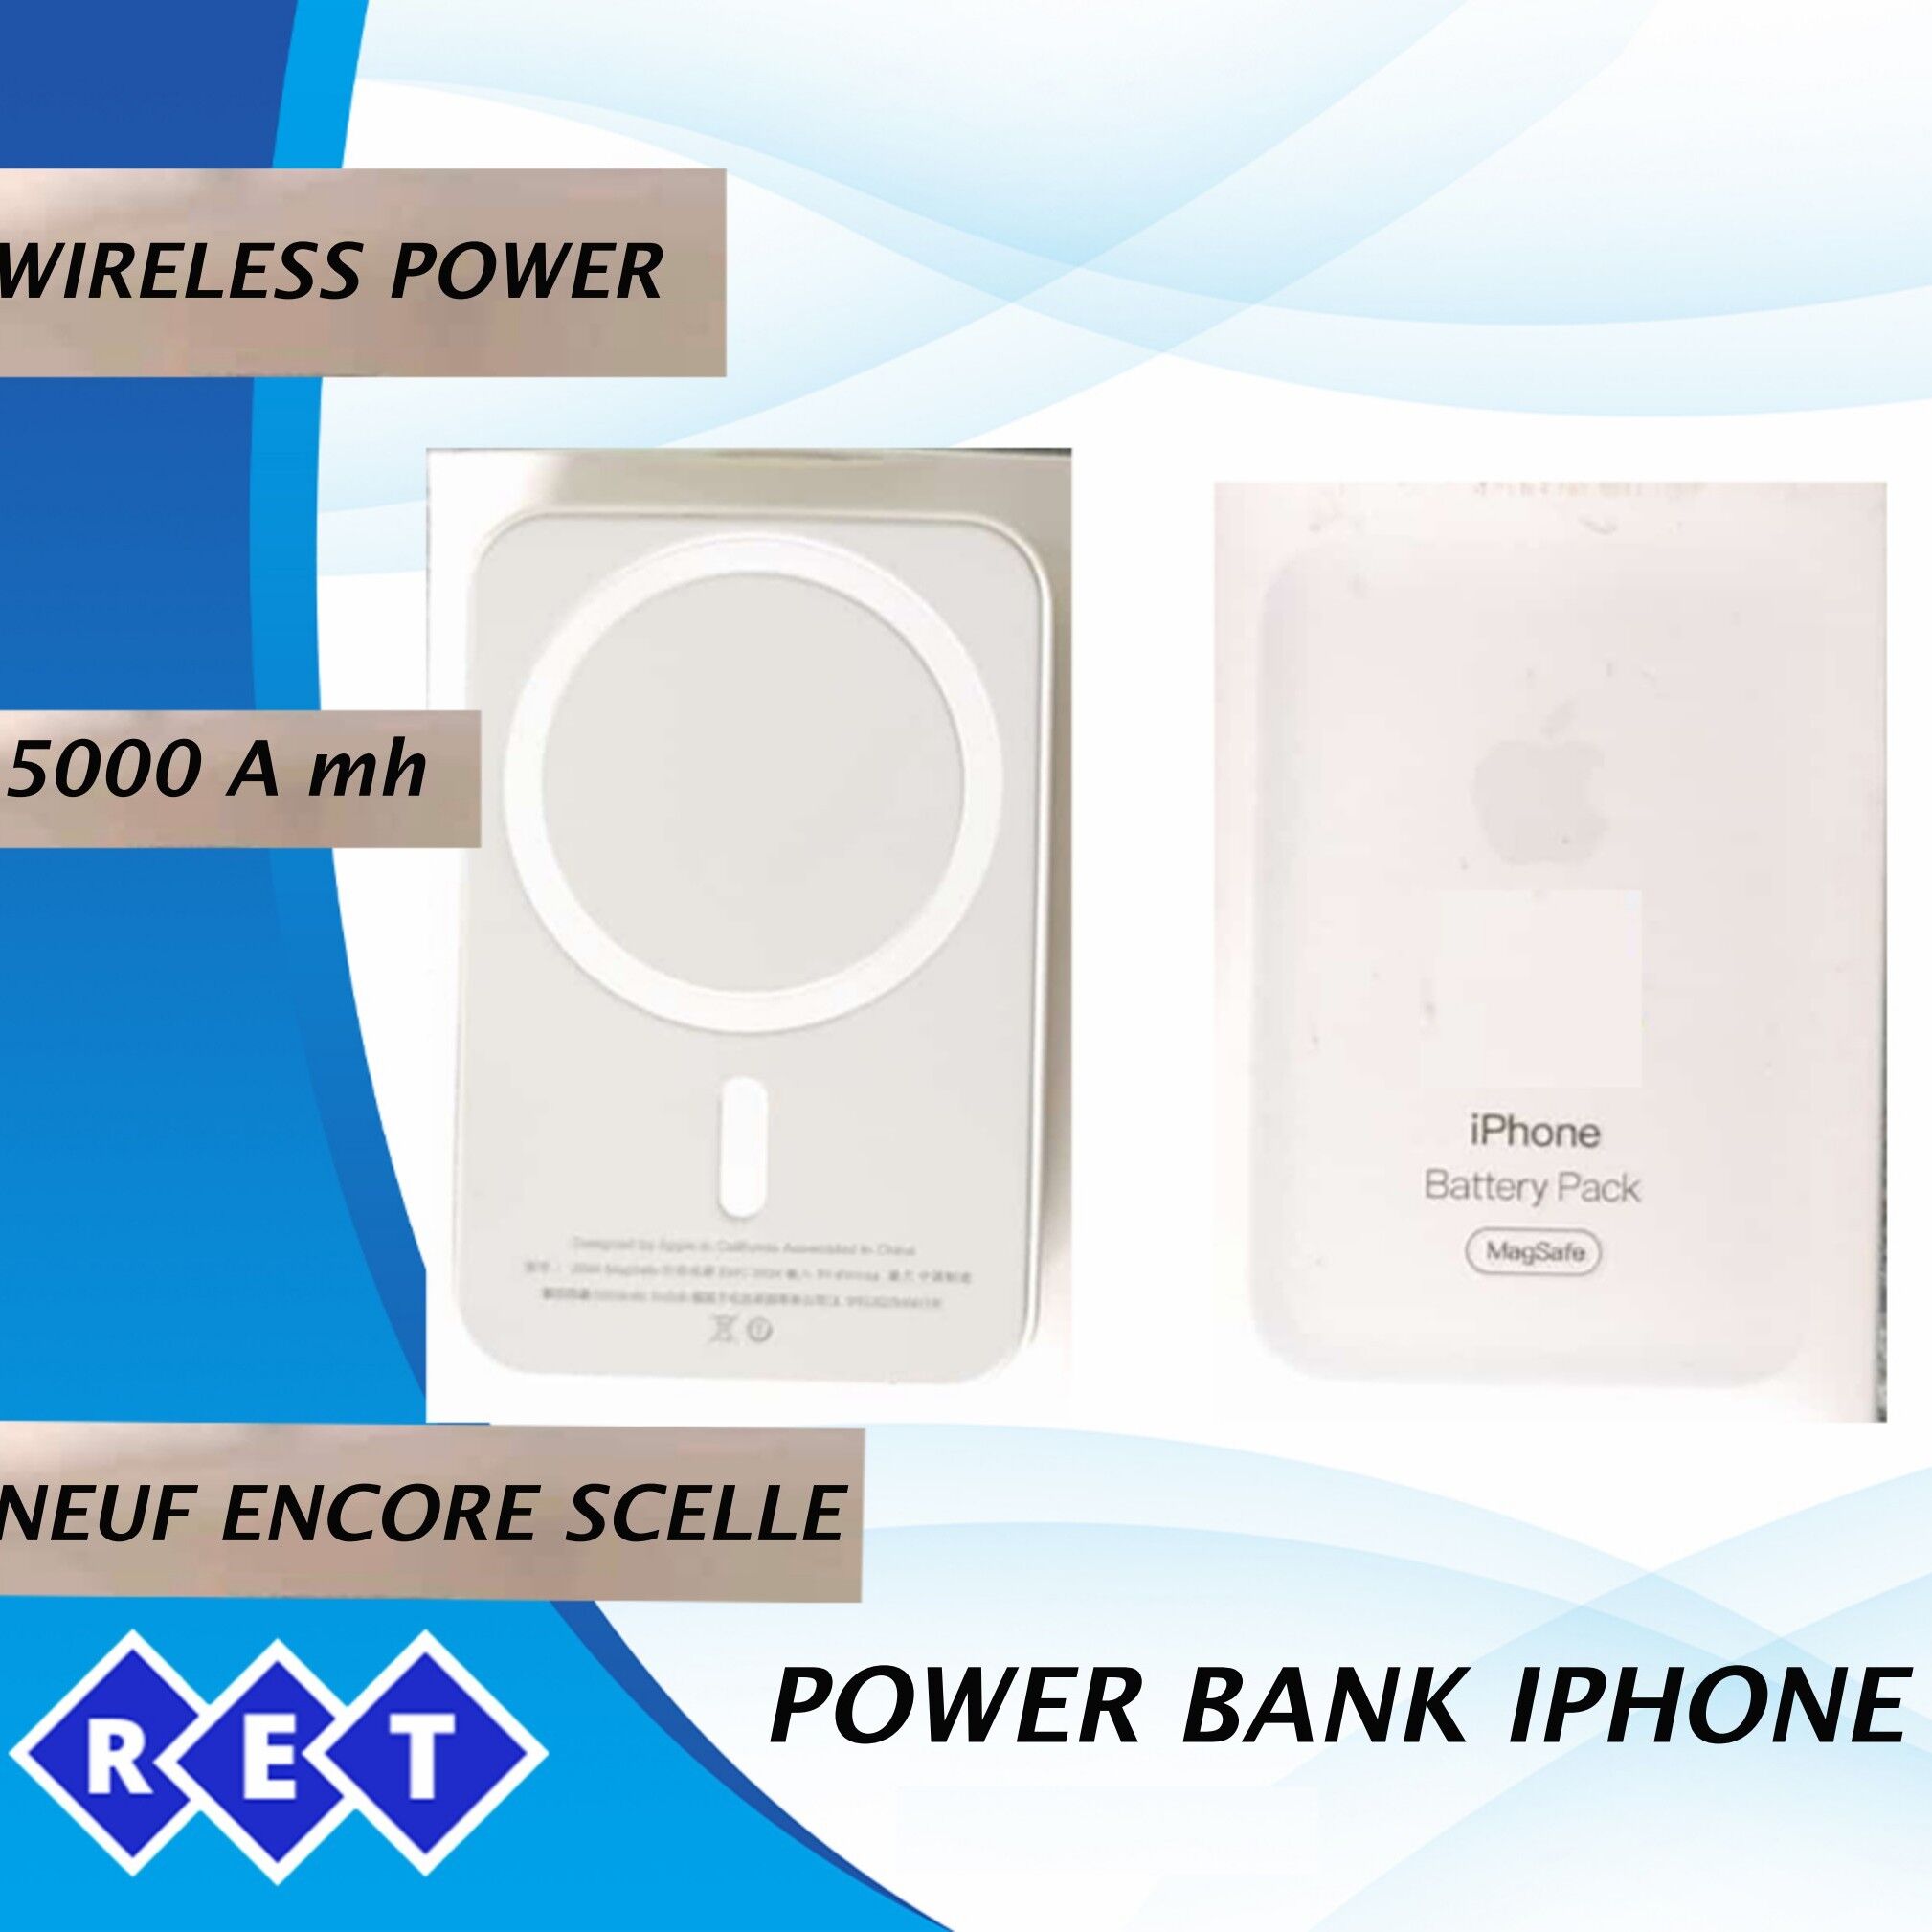 power bank iphone we